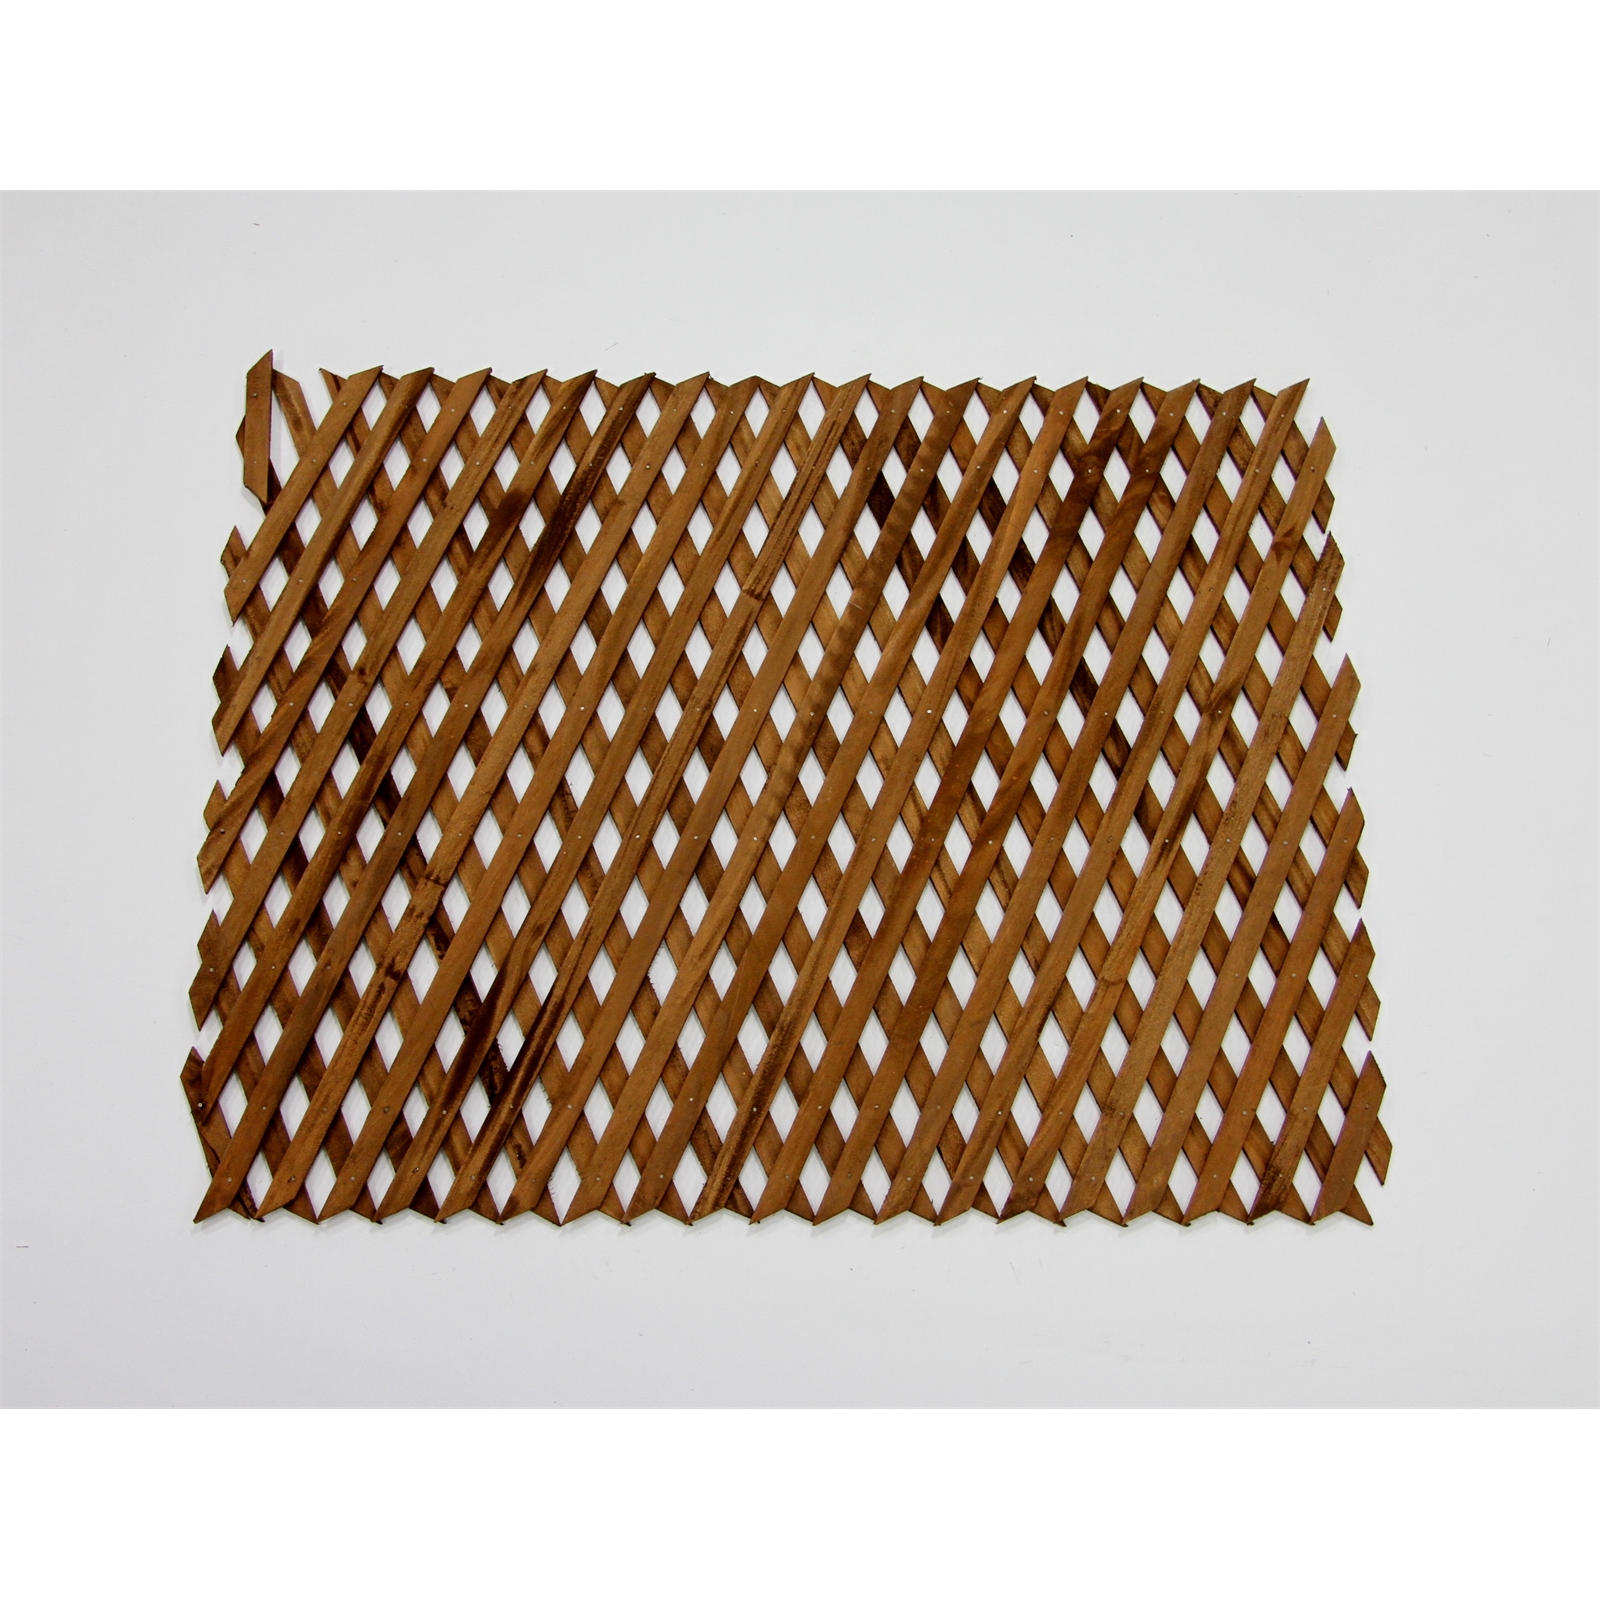 Lattice Makers 1800 x 900mm Brown Expandable Hardwood Trellis